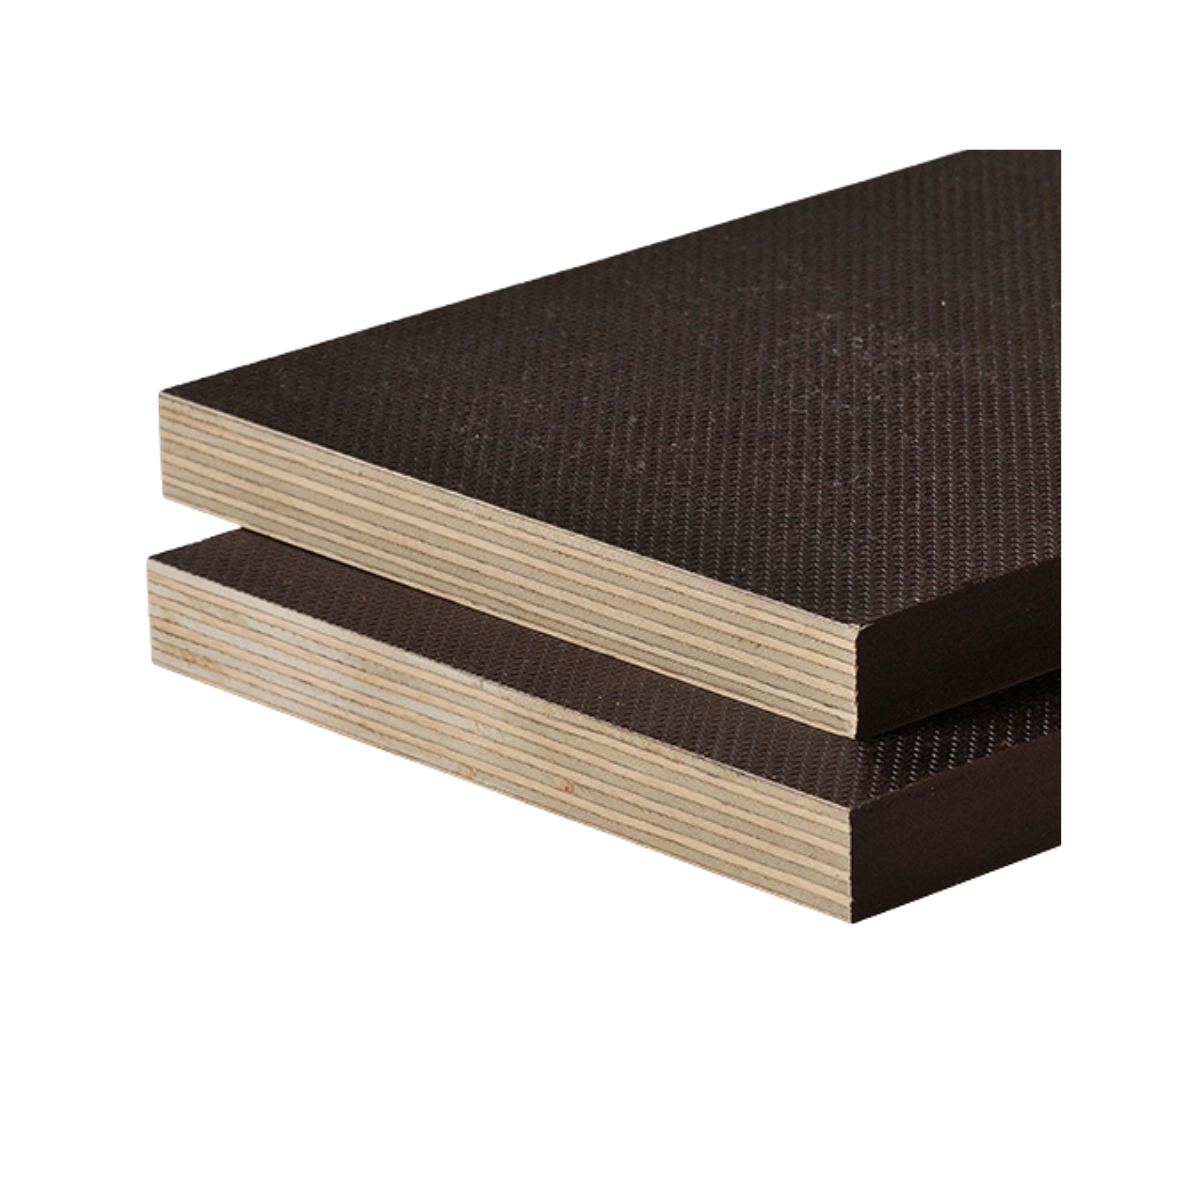 Antiskid playwood - Anti-slip TEGO formwork plywood 24 mm thickness, 1250 x 2500 mm class A, https:maxbau.ro